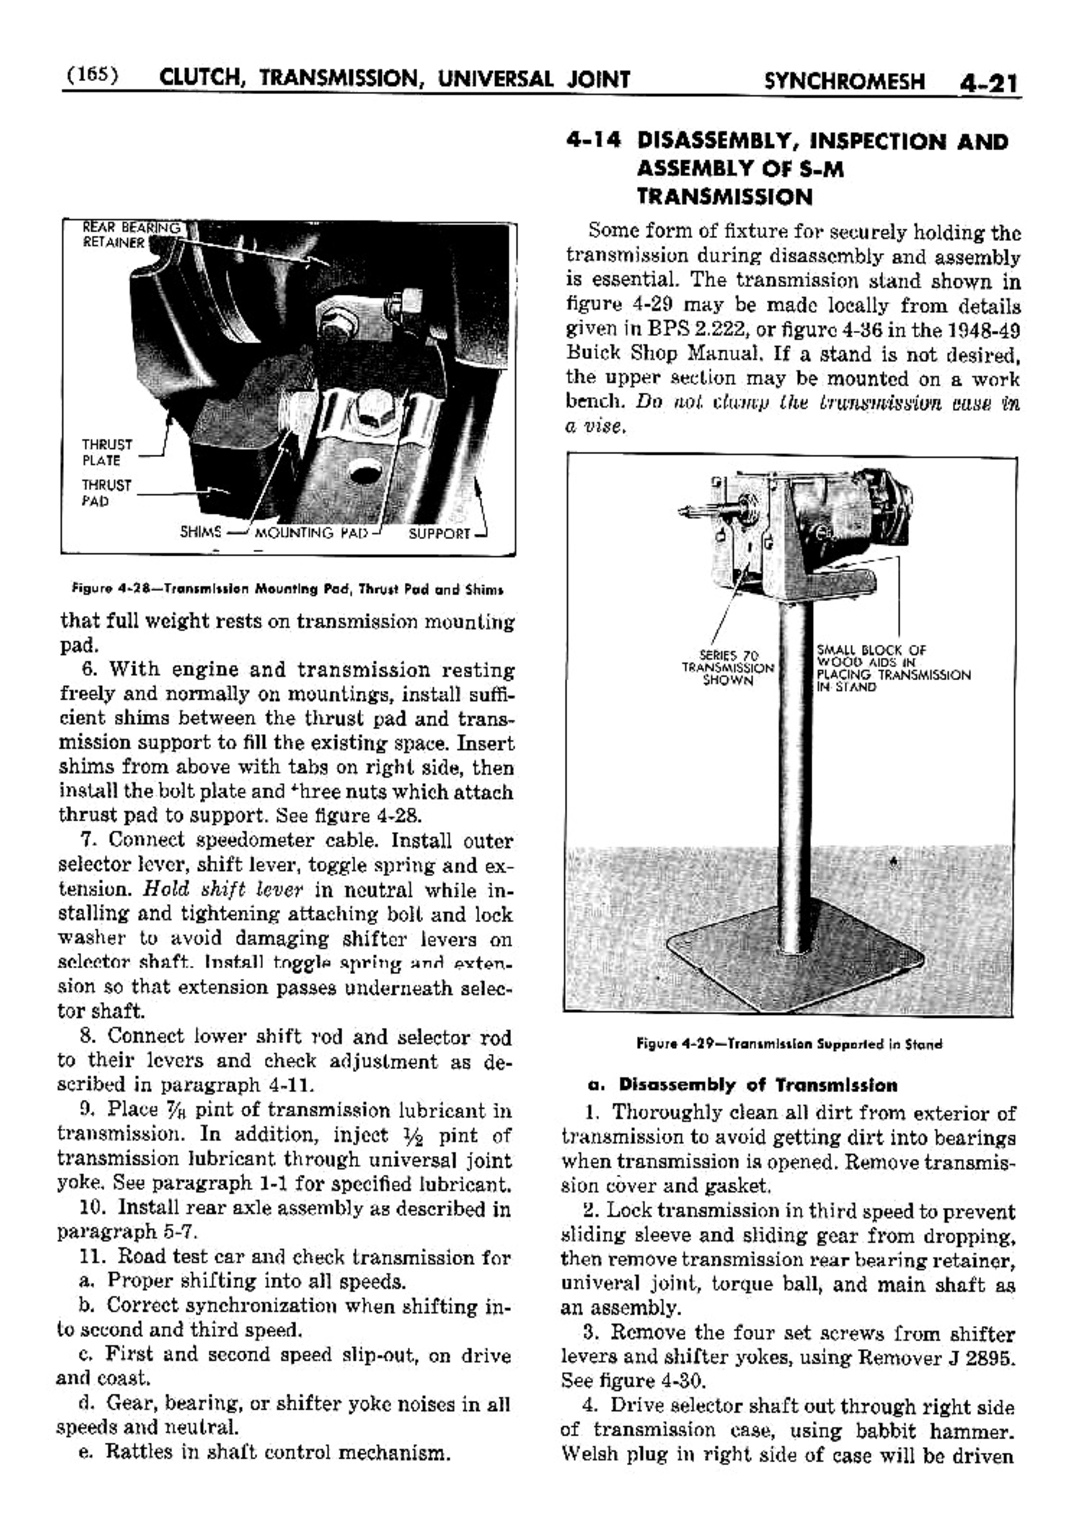 n_05 1952 Buick Shop Manual - Transmission-021-021.jpg